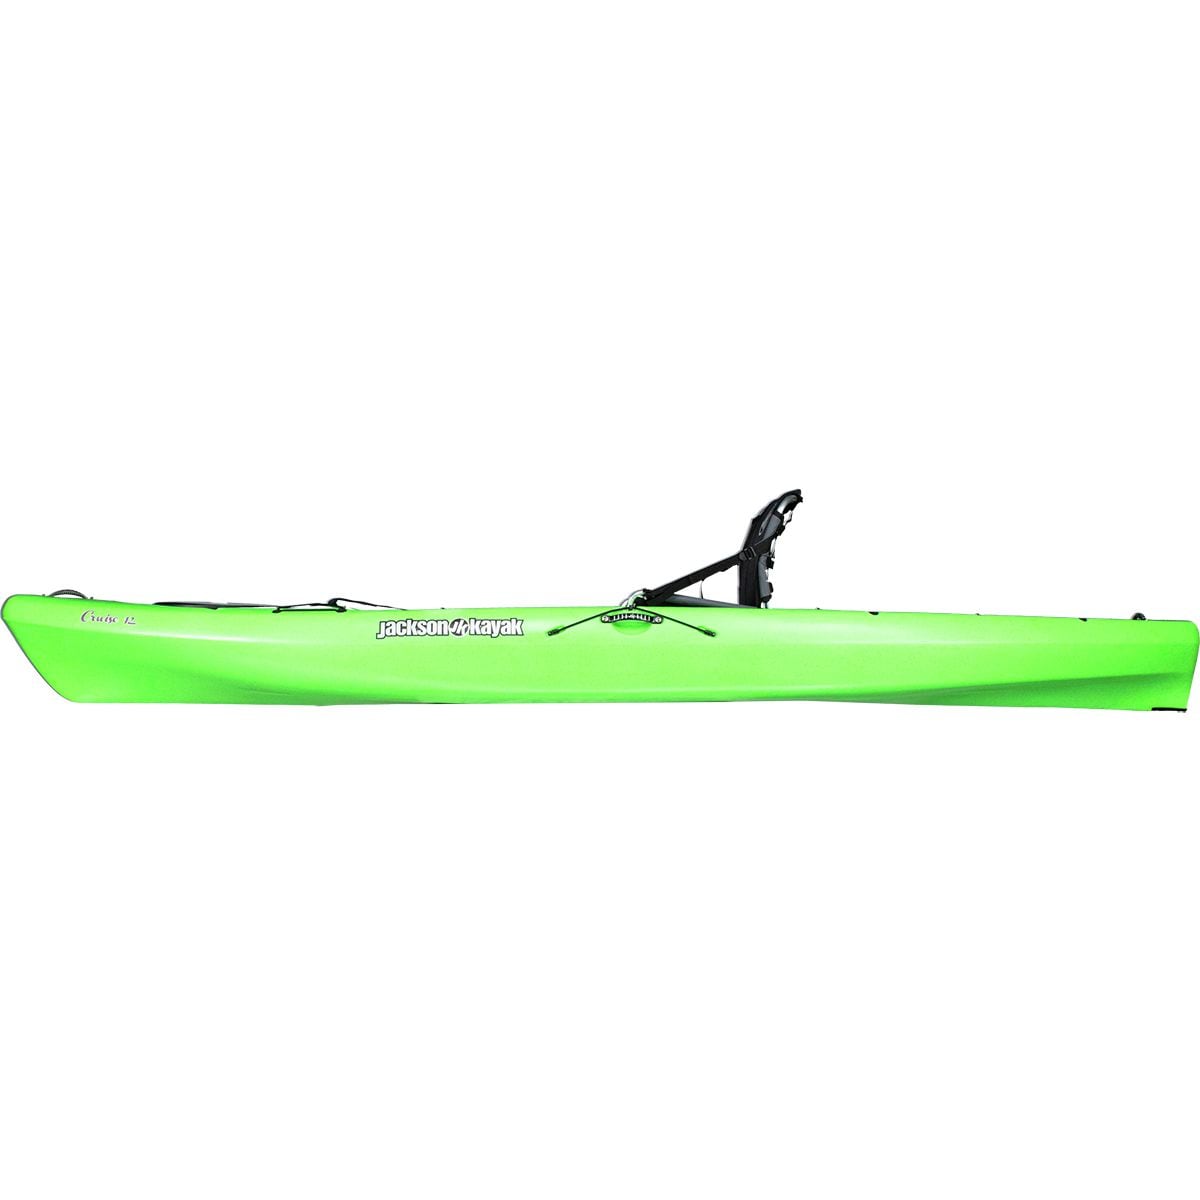 Jackson Kayak Cruise 12 Sit-On-Top Kayak - 2019 | Backcountry.com